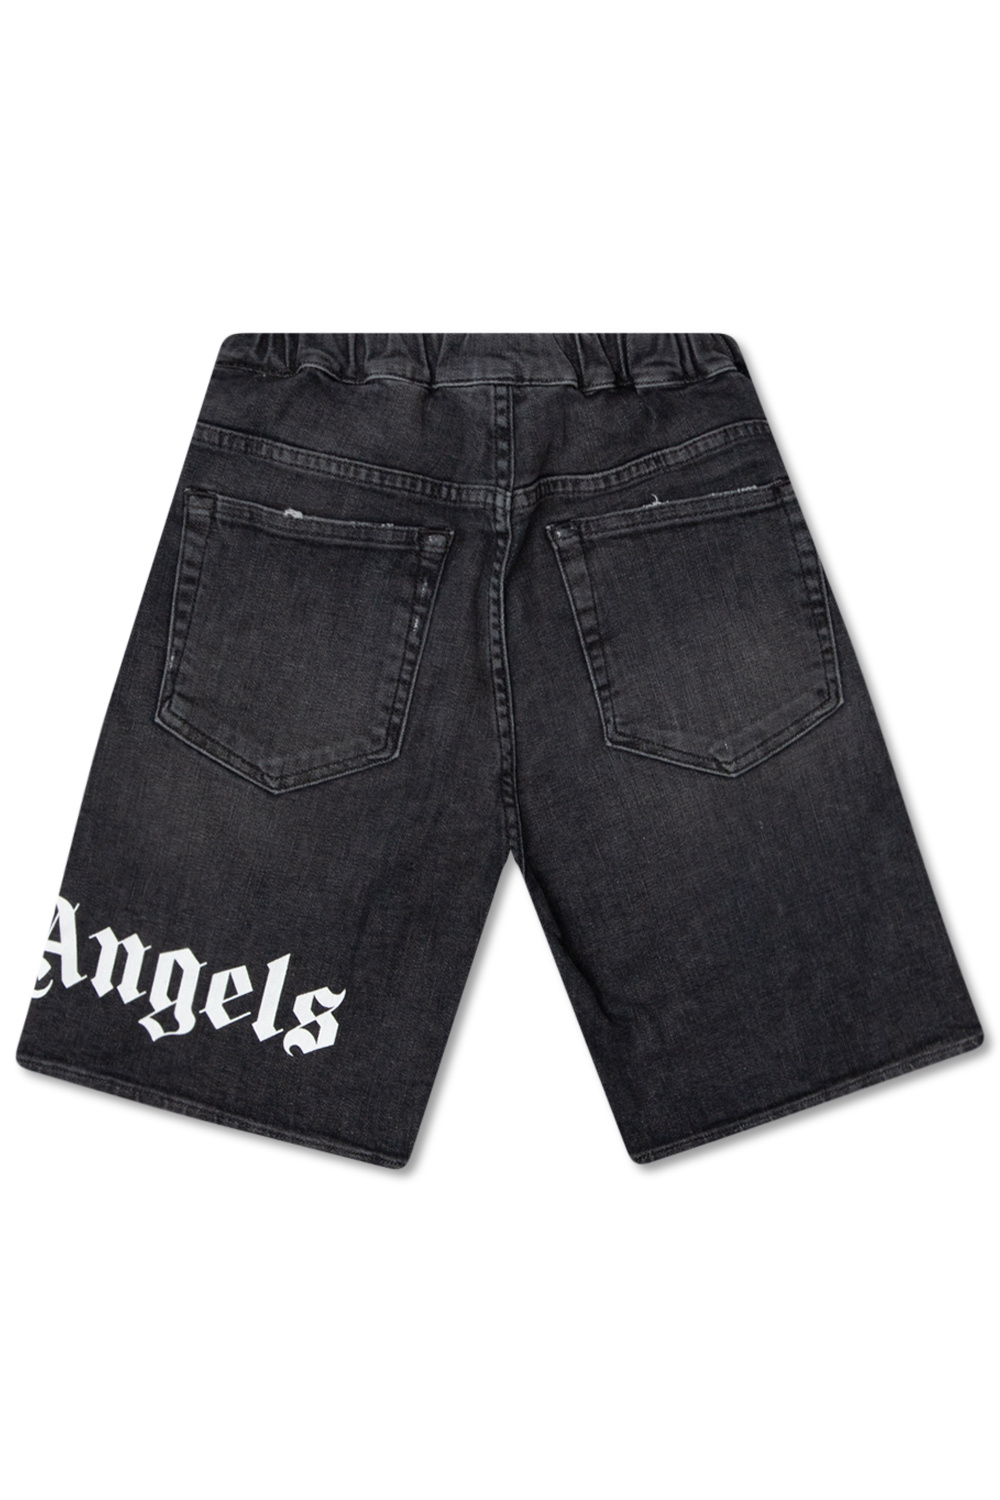 Palm Angels Kids Chevron Printed Swim Shorts